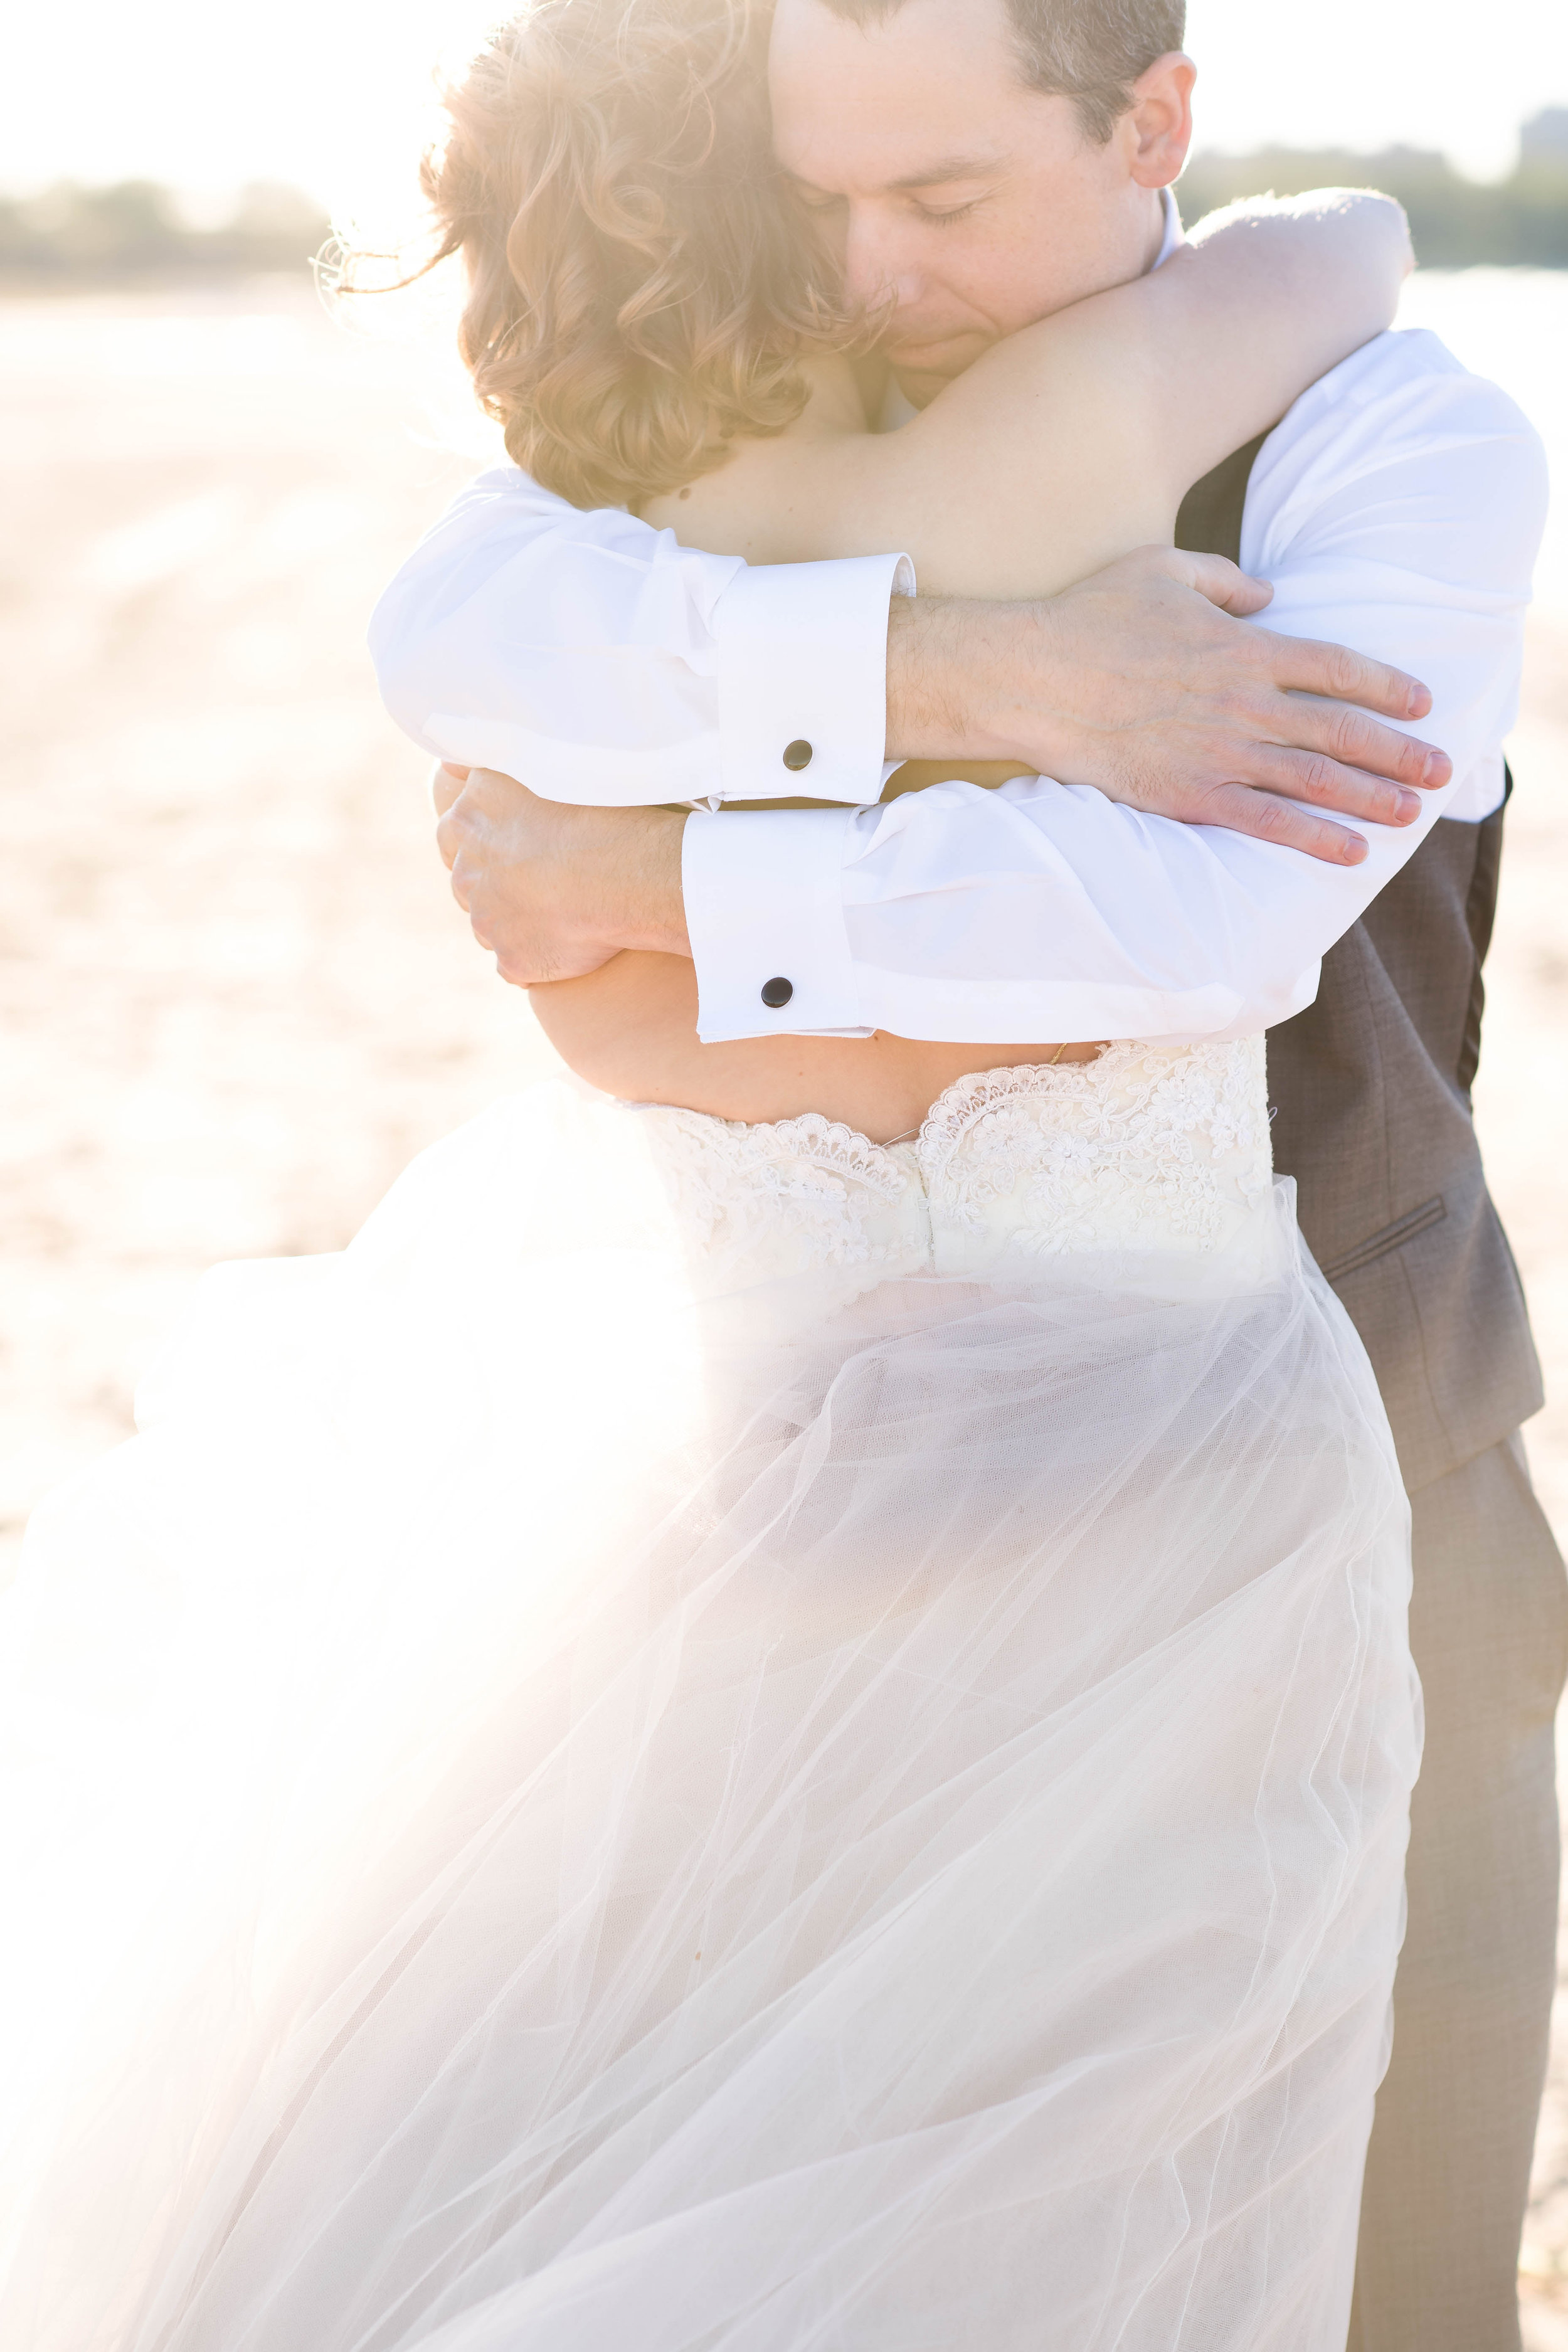 Dancer-Ballerina Bride - Beach Wedding Photos — The Overwhelmed Bride Wedding Blog